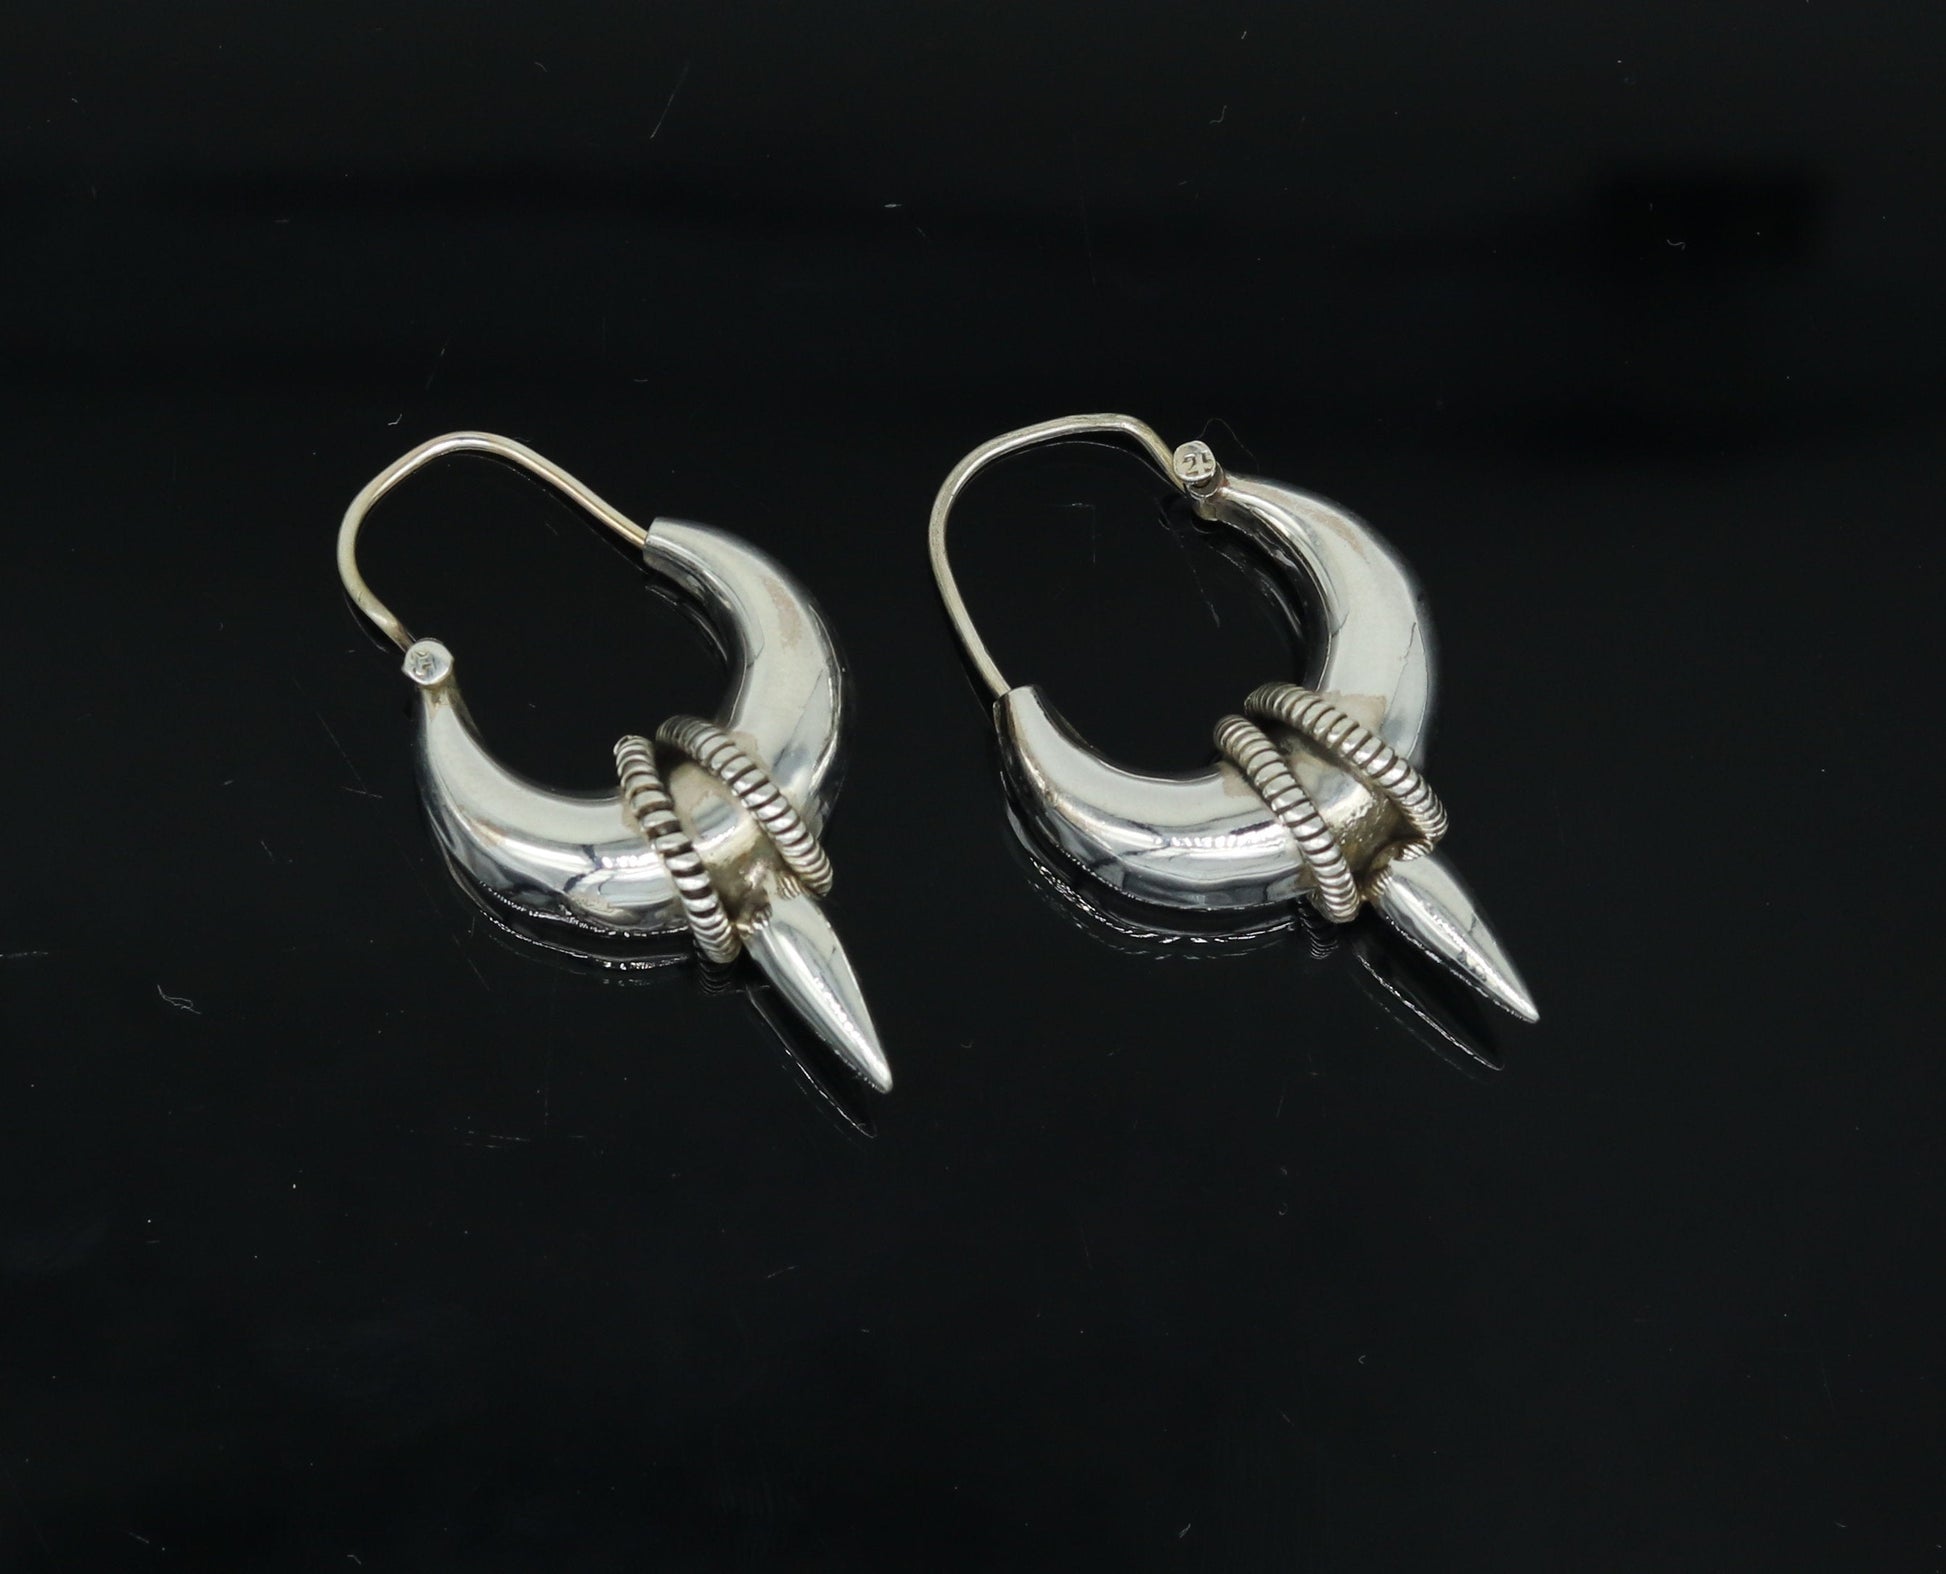 Pure 925 sterling Handmade silver jewelry, fabulous vintage stylish customized hoops earrings bali tribal ethnic personalized jewelry ske6 - TRIBAL ORNAMENTS